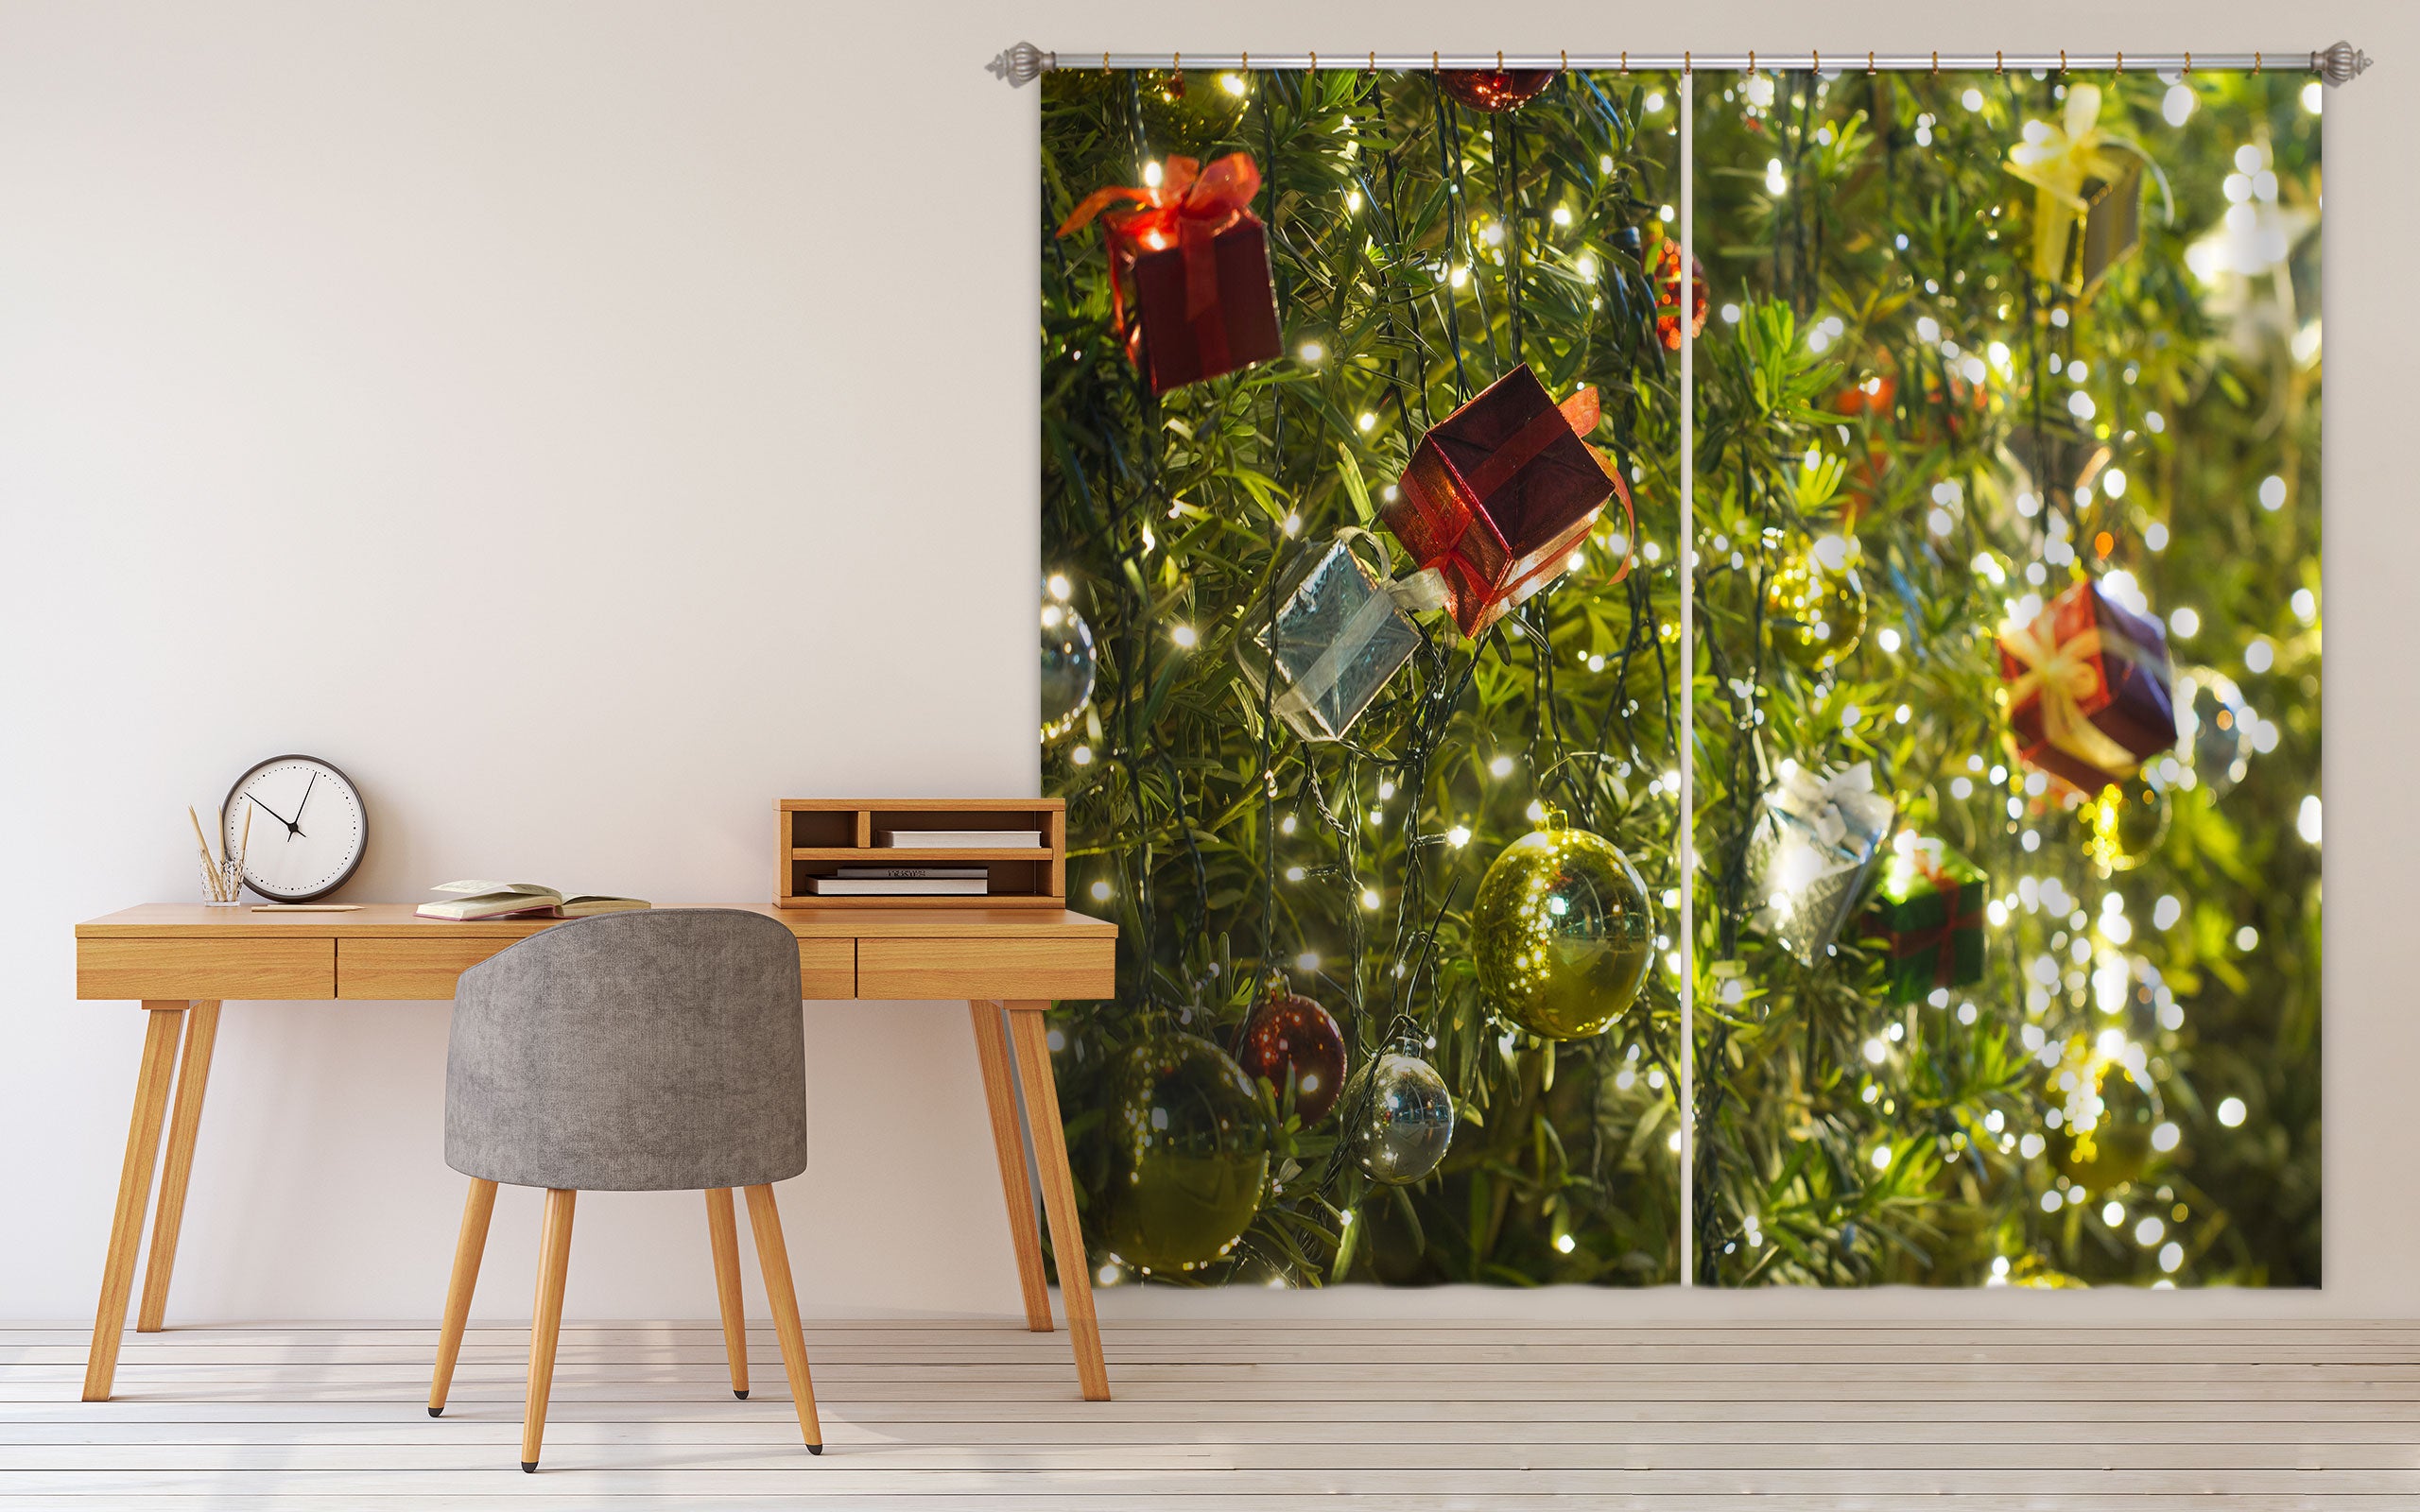 3D Gift Box Pendant 52056 Christmas Curtains Drapes Xmas